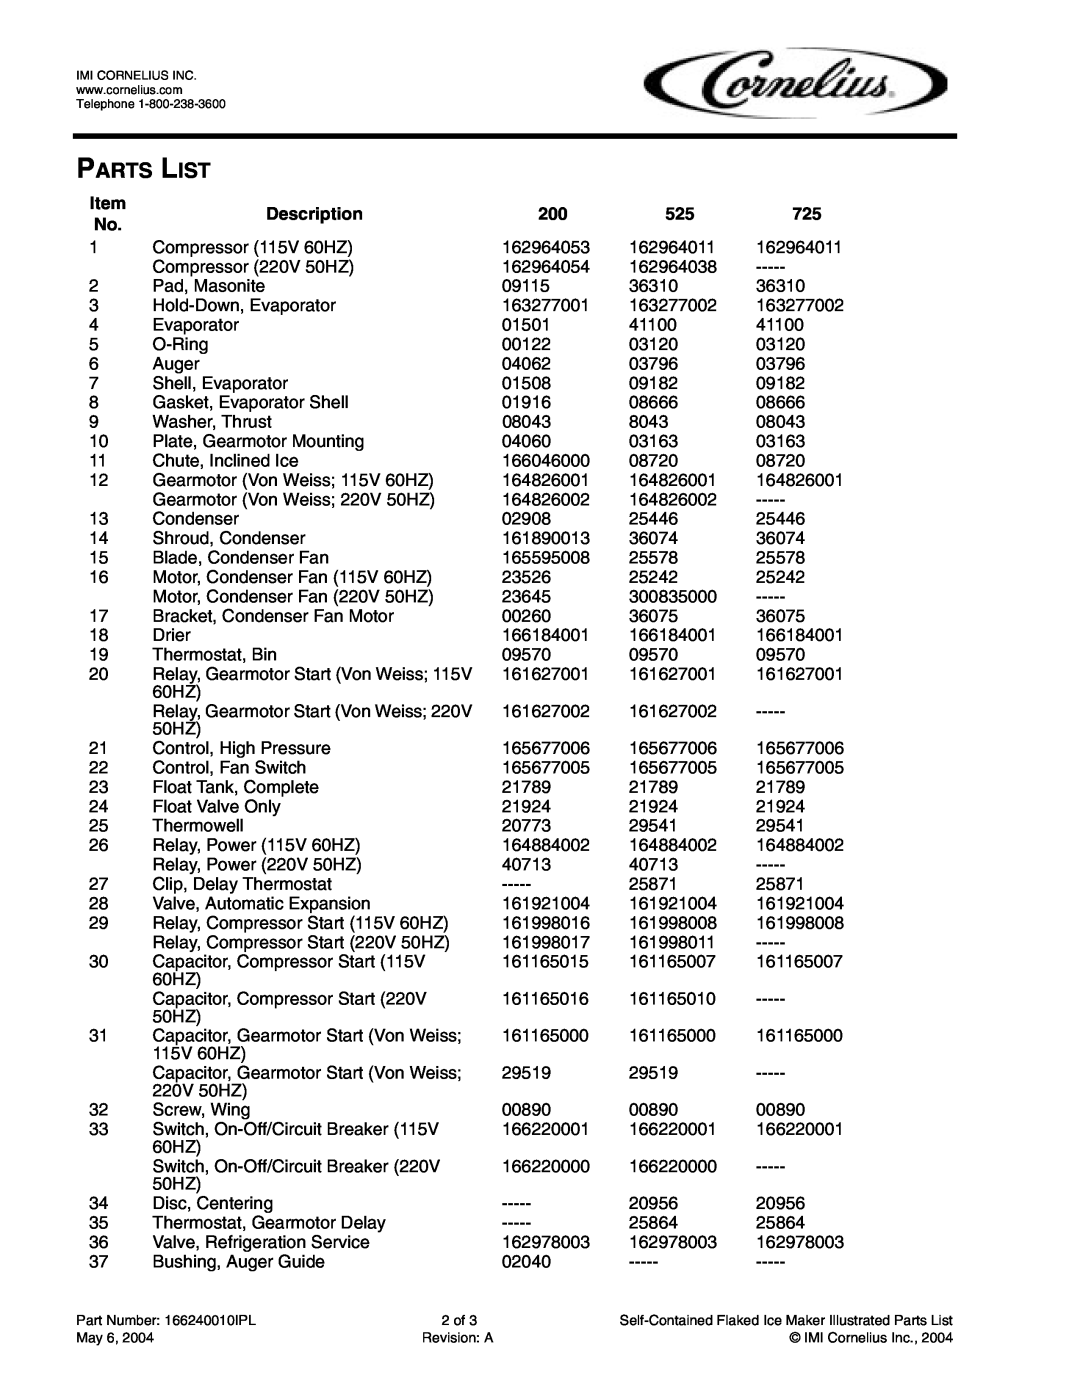 Cornelius 525, 725, 200 manual Parts List, Item, Description 